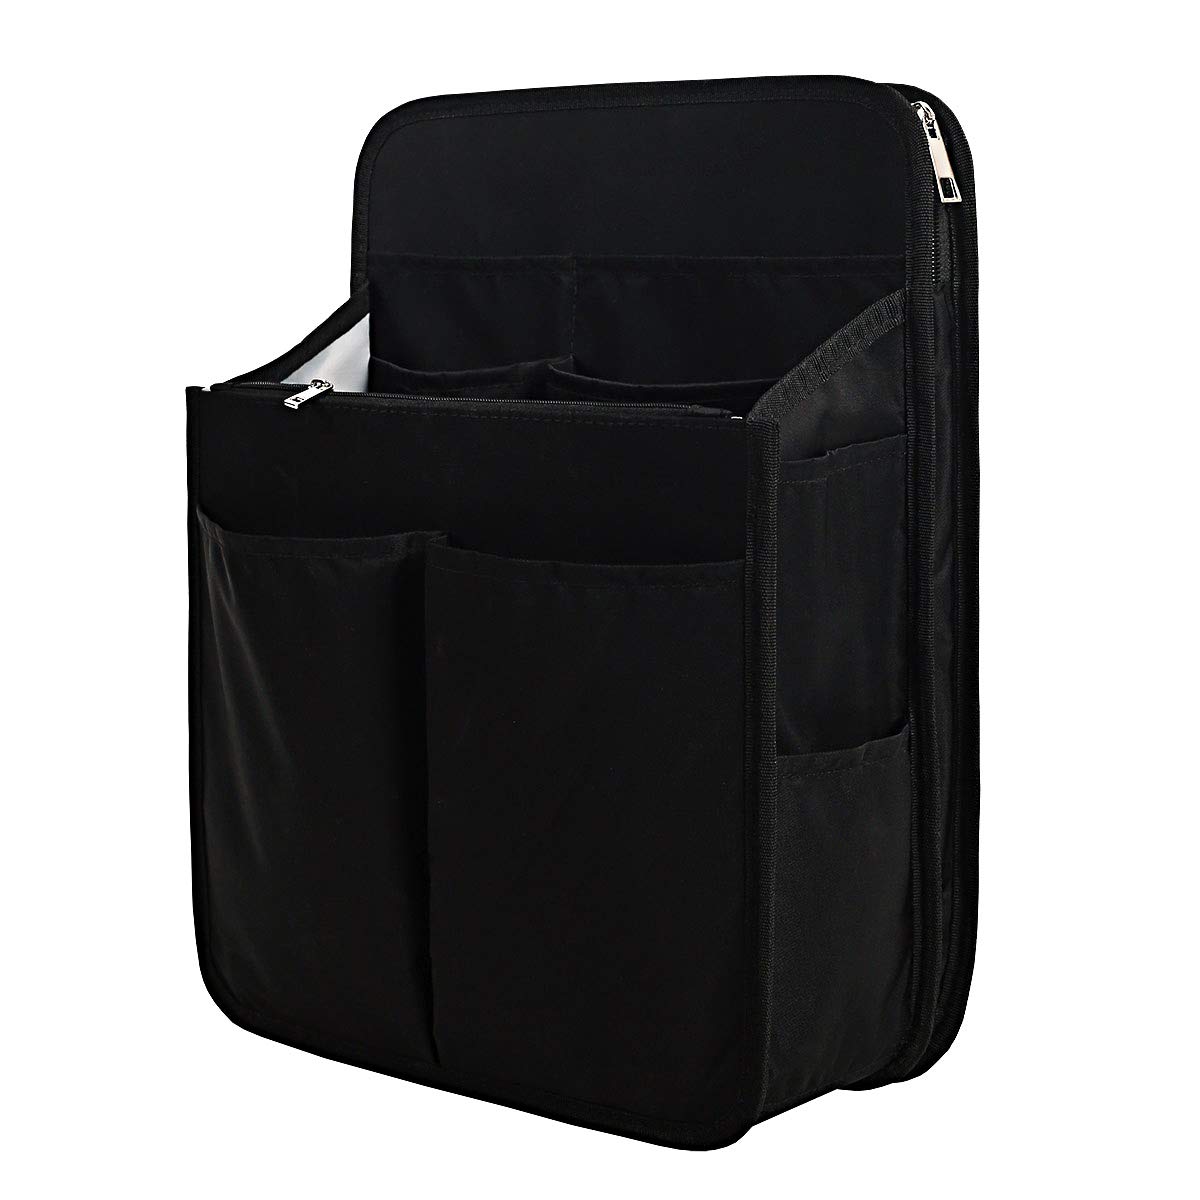 Yoillione Nylon Backpack Organizer Insert for Men and Women, Lightweight Travel Rucksack Insert with High Capacity, Large Bag Organizer with Zipper Pockets